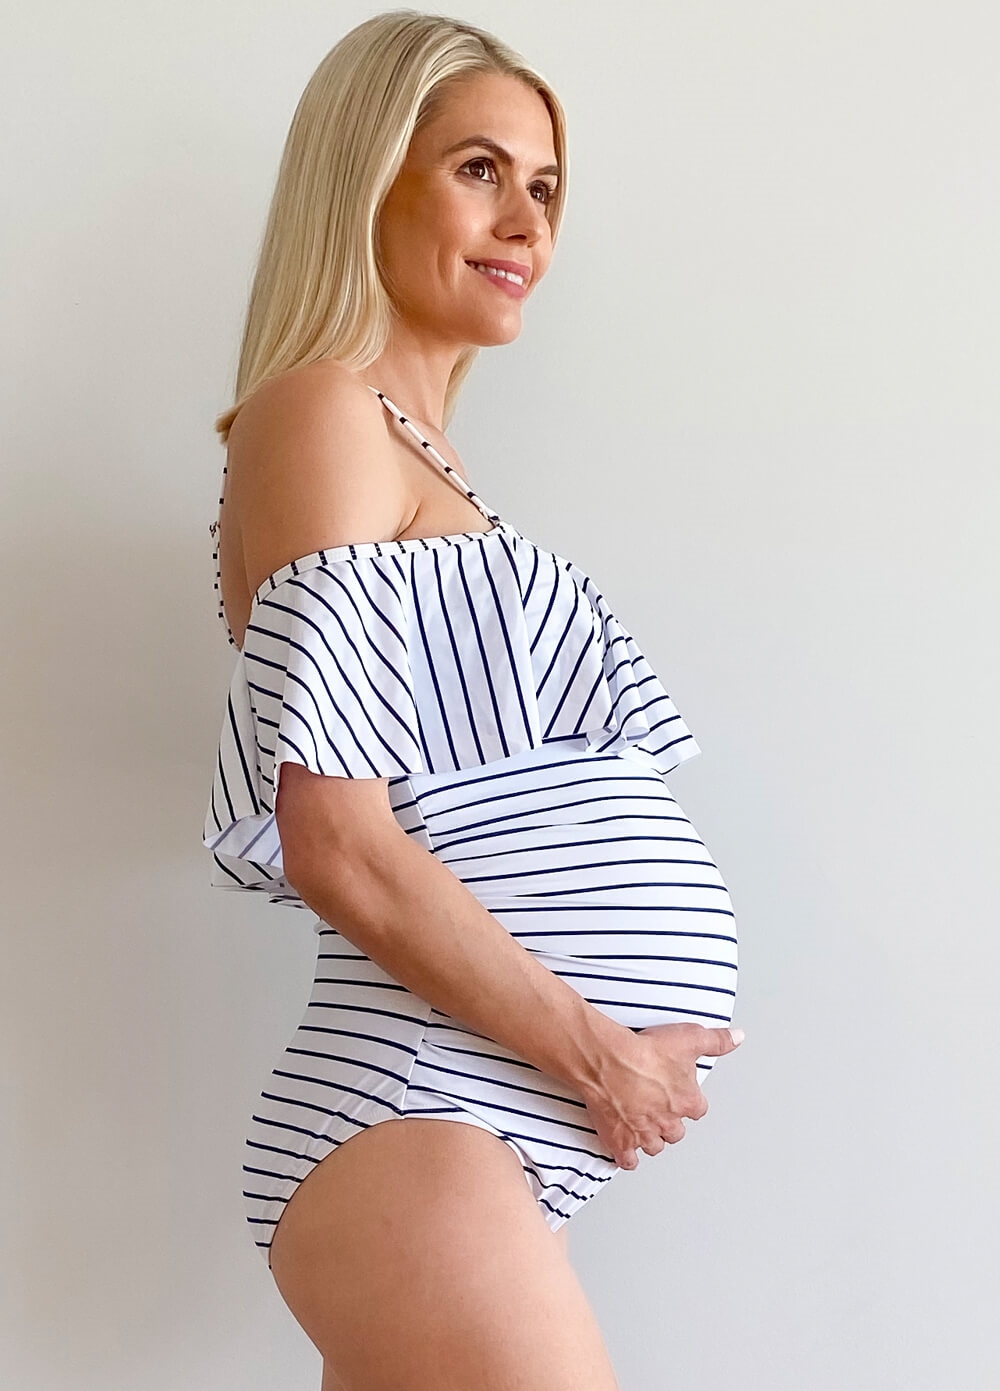 Lait & Co - Isabella Babymoon Pregnancy Swimsuit | Queen Bee